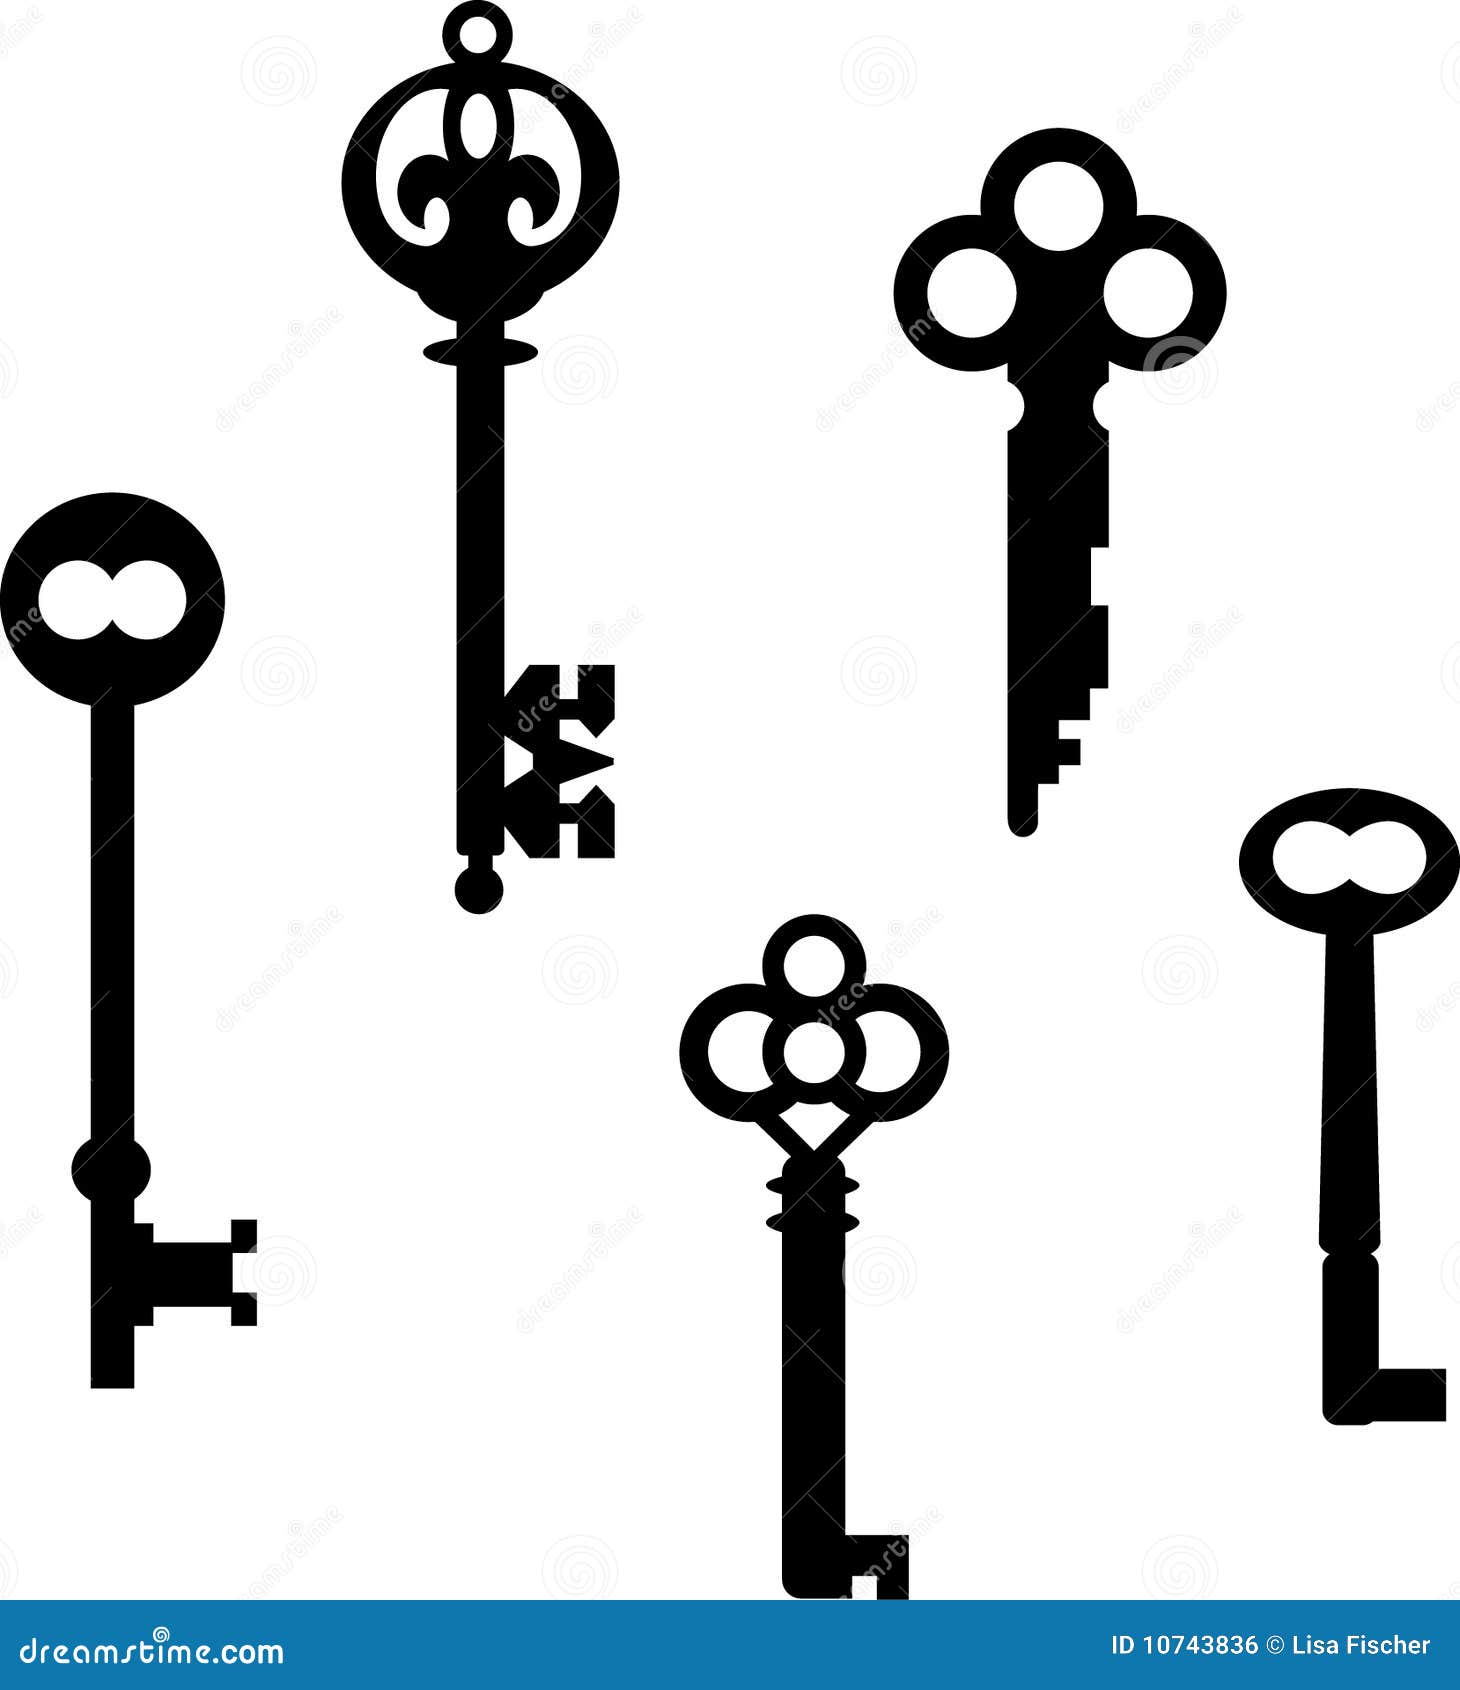 set of keys clipart - photo #22